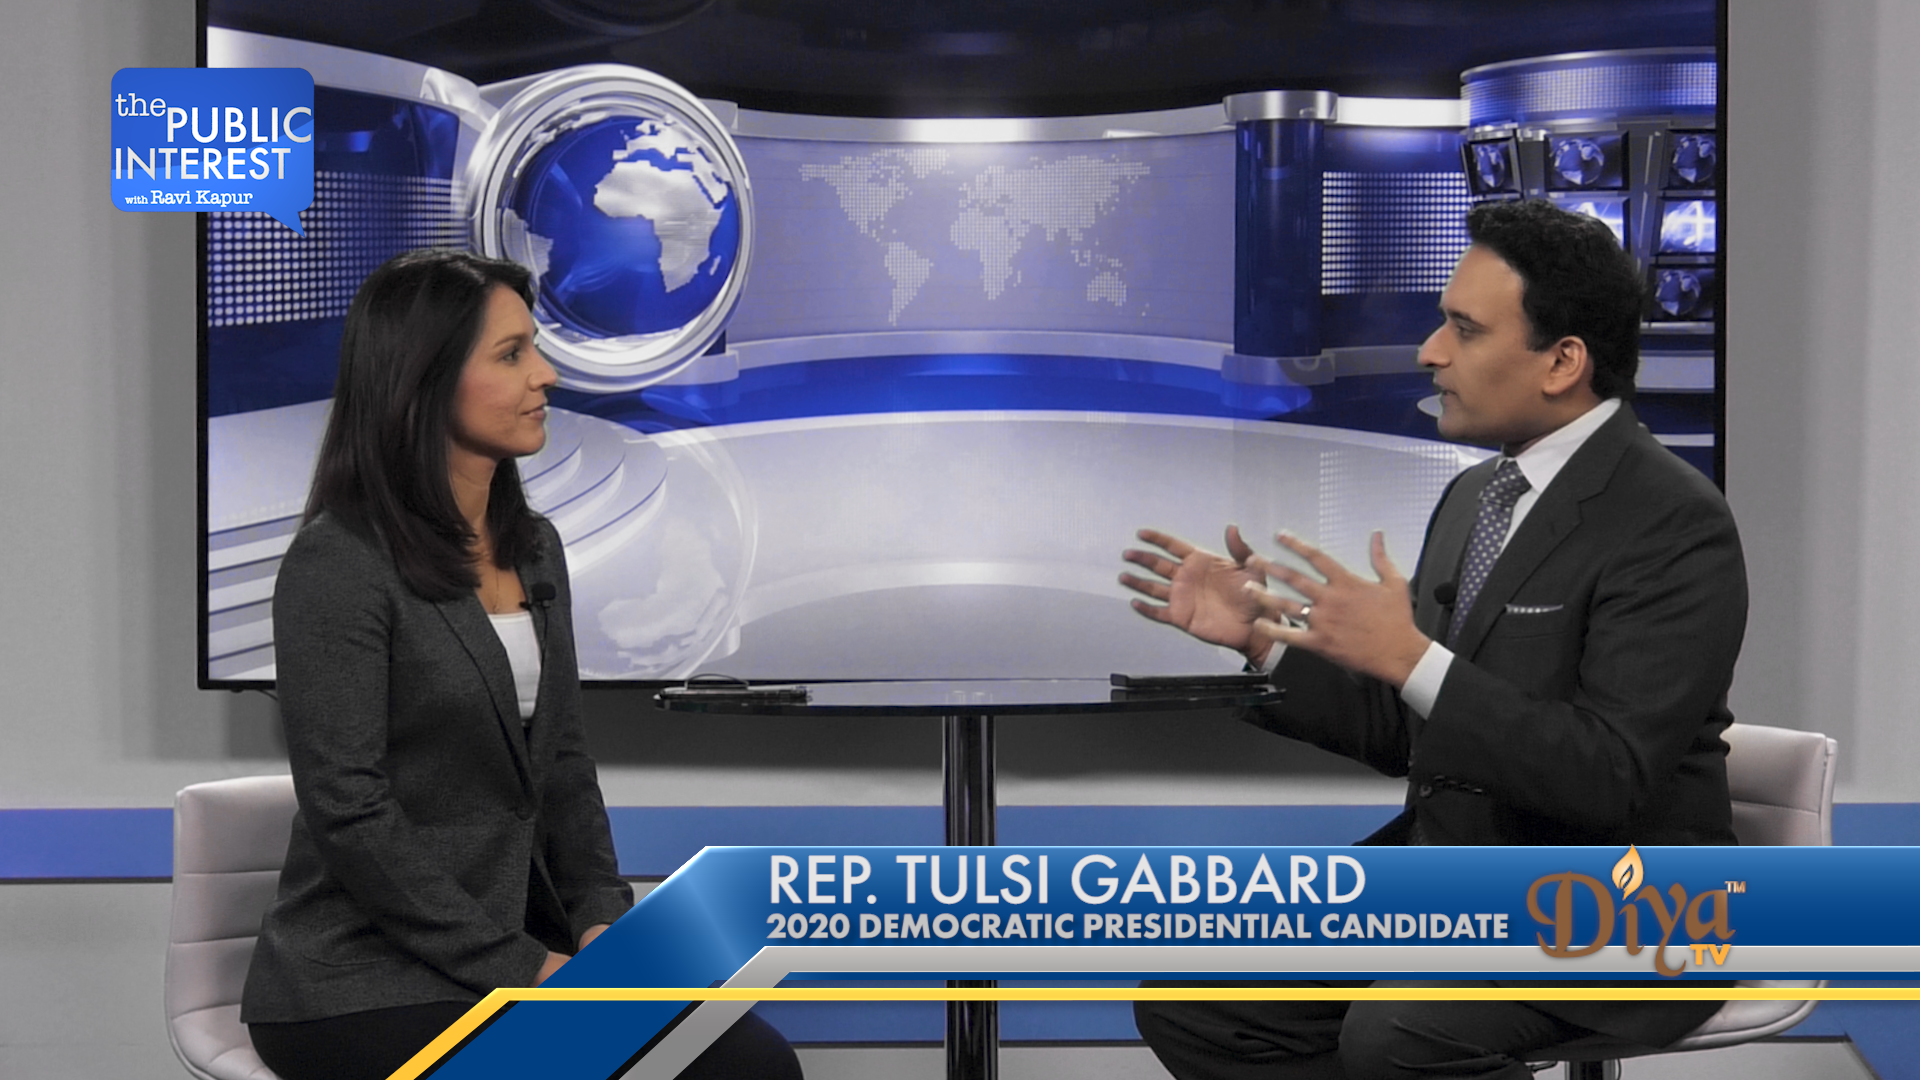 EXCLUSIVE INTERVIEW: Tulsi Gabbard on her 2020 Presidential Run